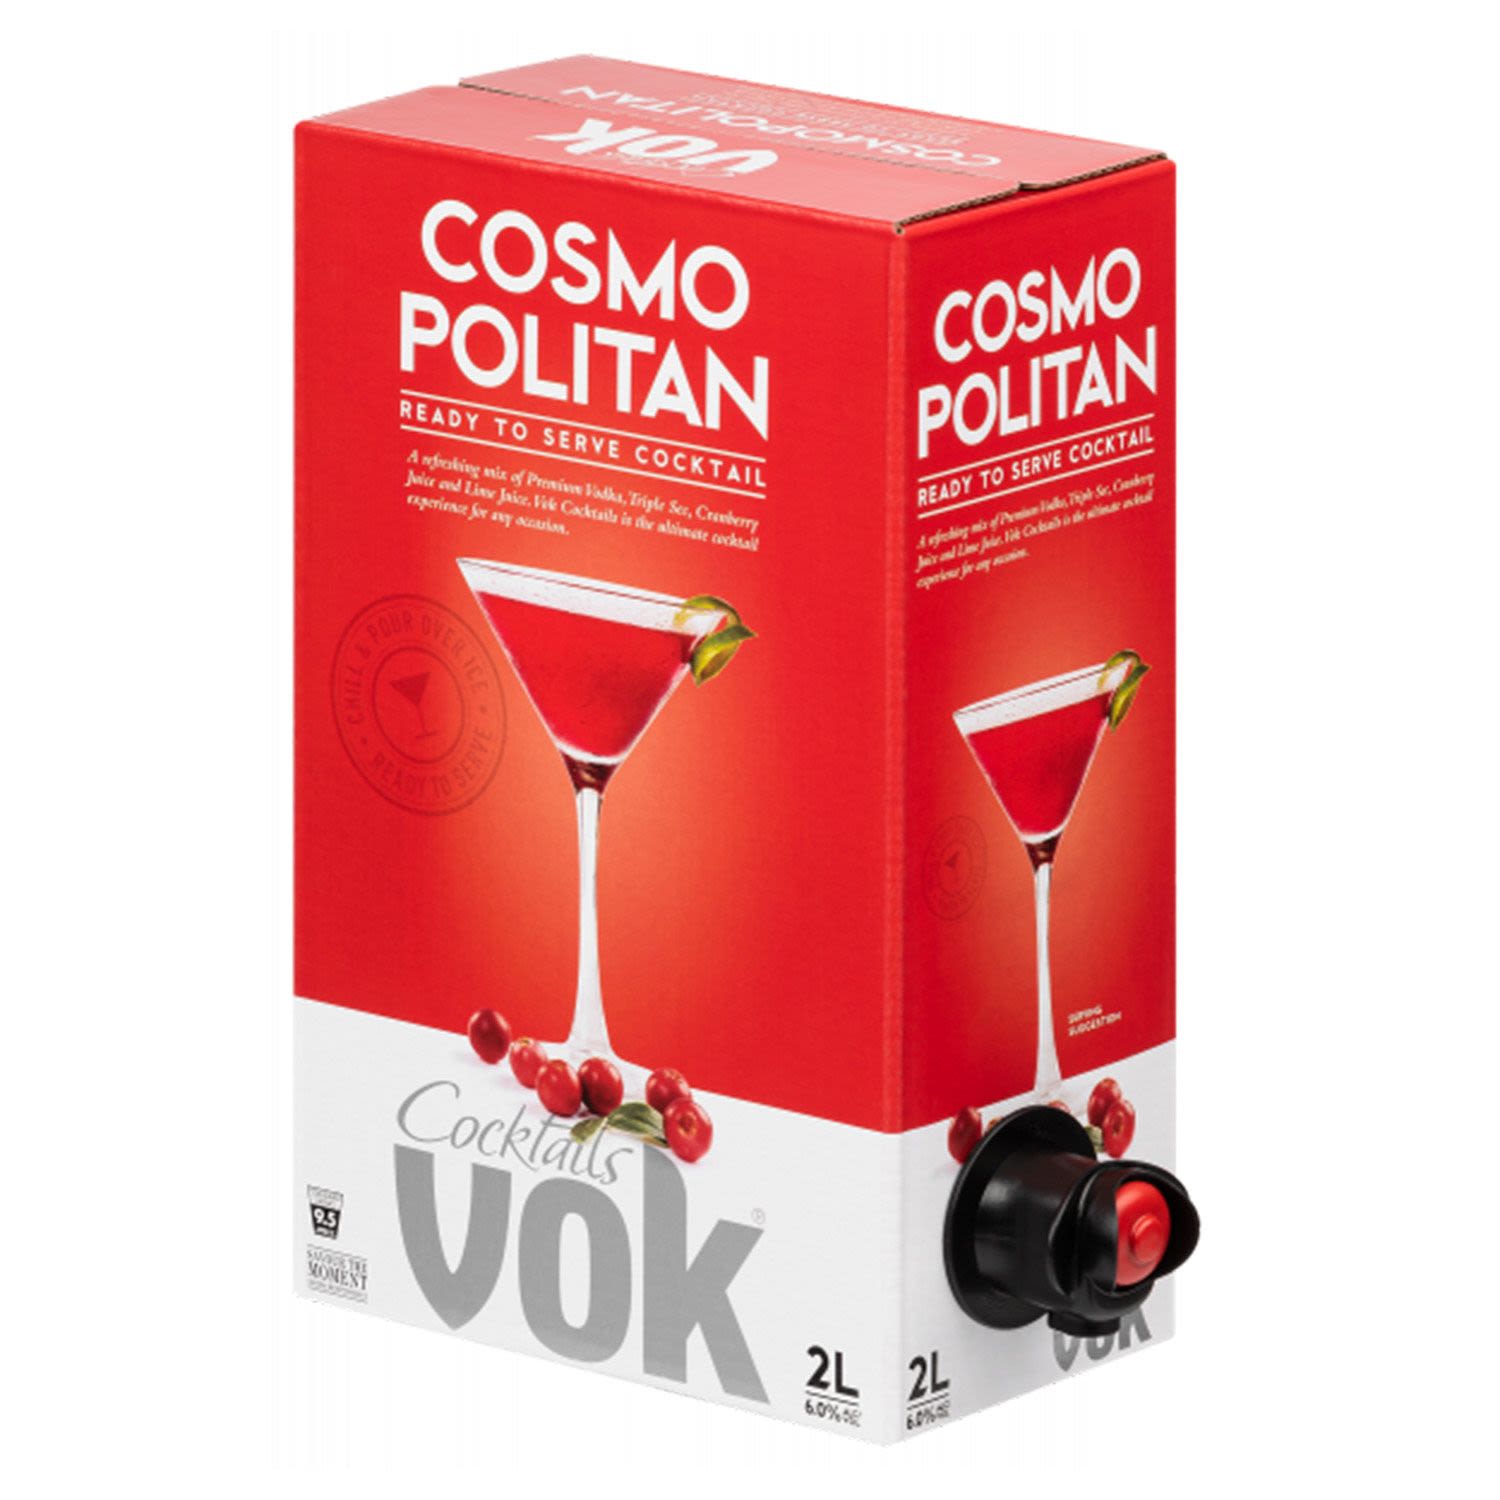 Vok Cocktails Cosmo Cask 2L Cask